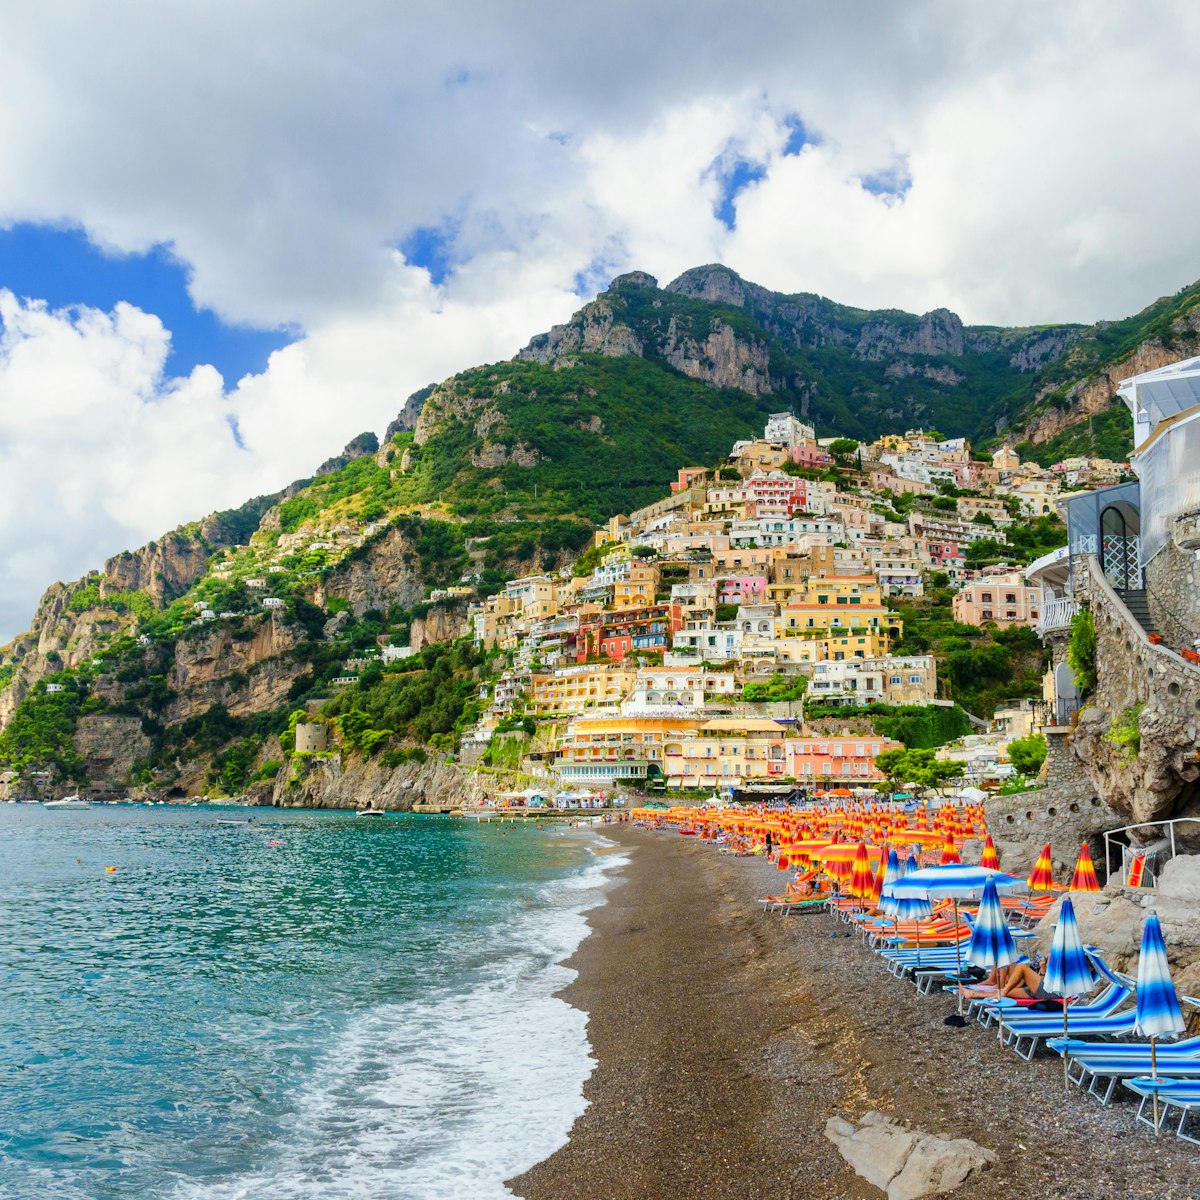 amazing beach in Positano on Amalfi coast
1092754244